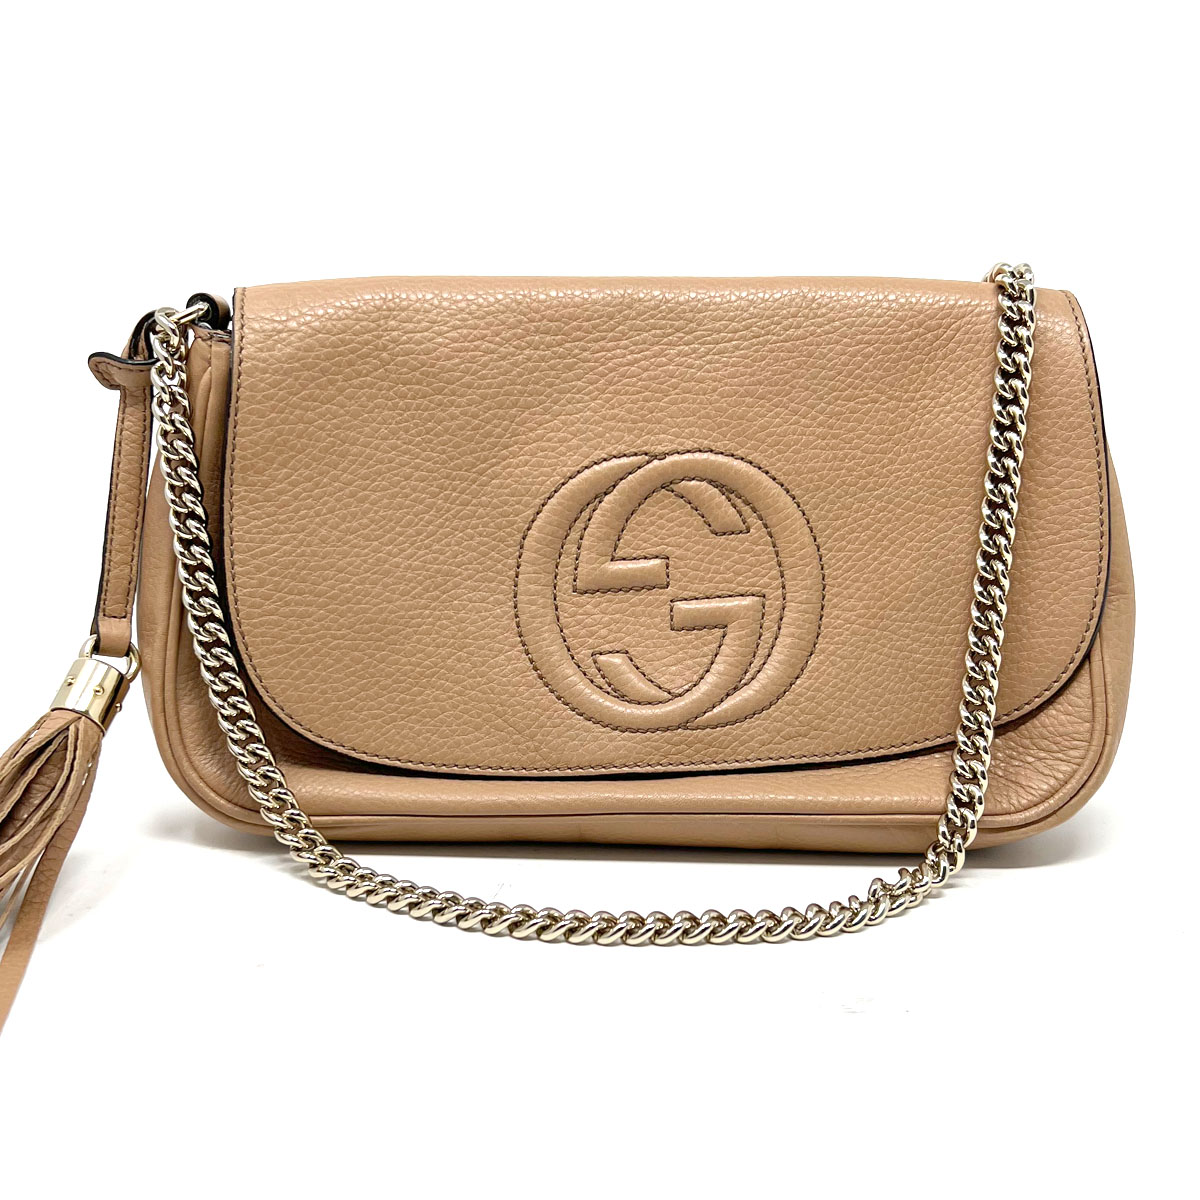 Chanel Beige Quilted Lambskin Soft Leather Medium Shoulder Bag - Boca Pawn